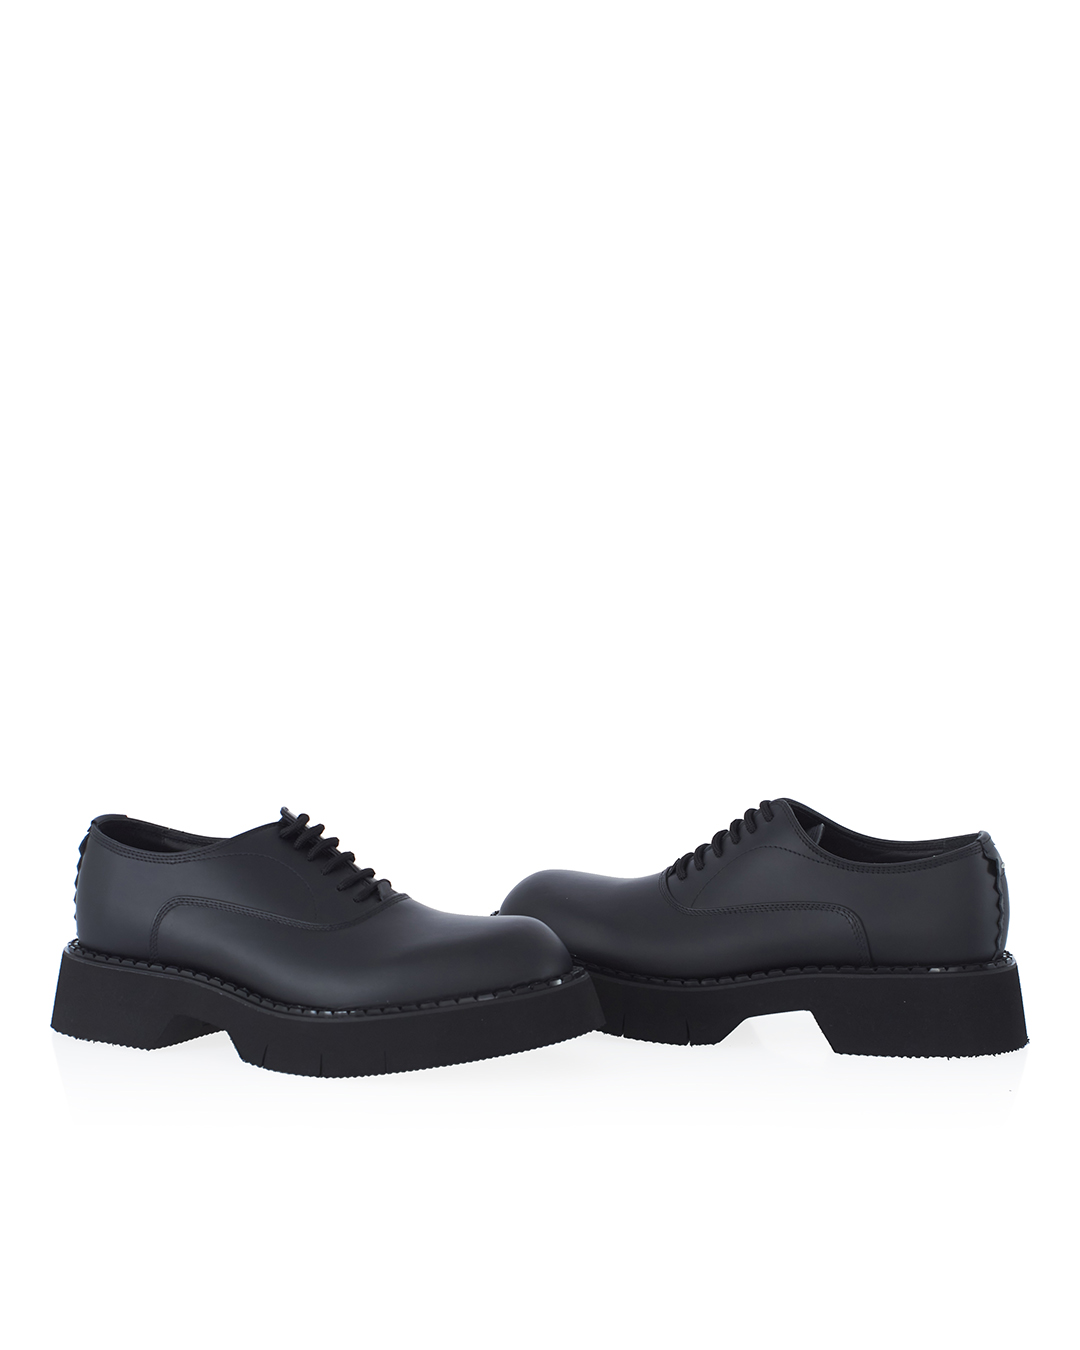 ботинки THE-ANTIPODE SCOTTO027 черный 40, размер 40 - фото 2